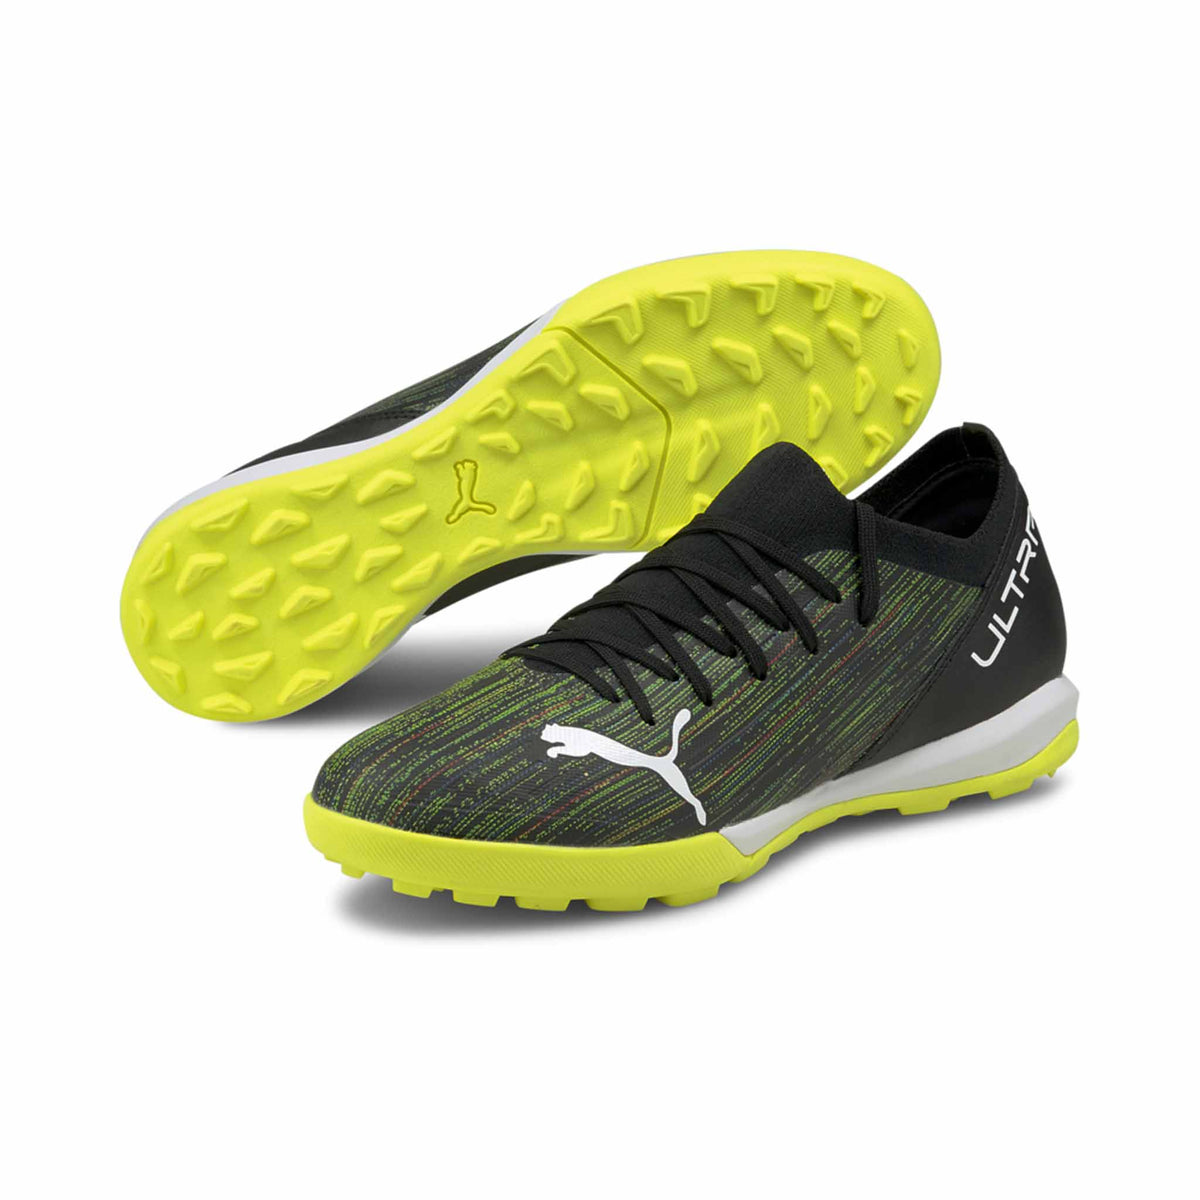 Puma Ultra 3.2 TT chaussures de soccer turf - Puma Black / Puma White / Yellow Alert - paire